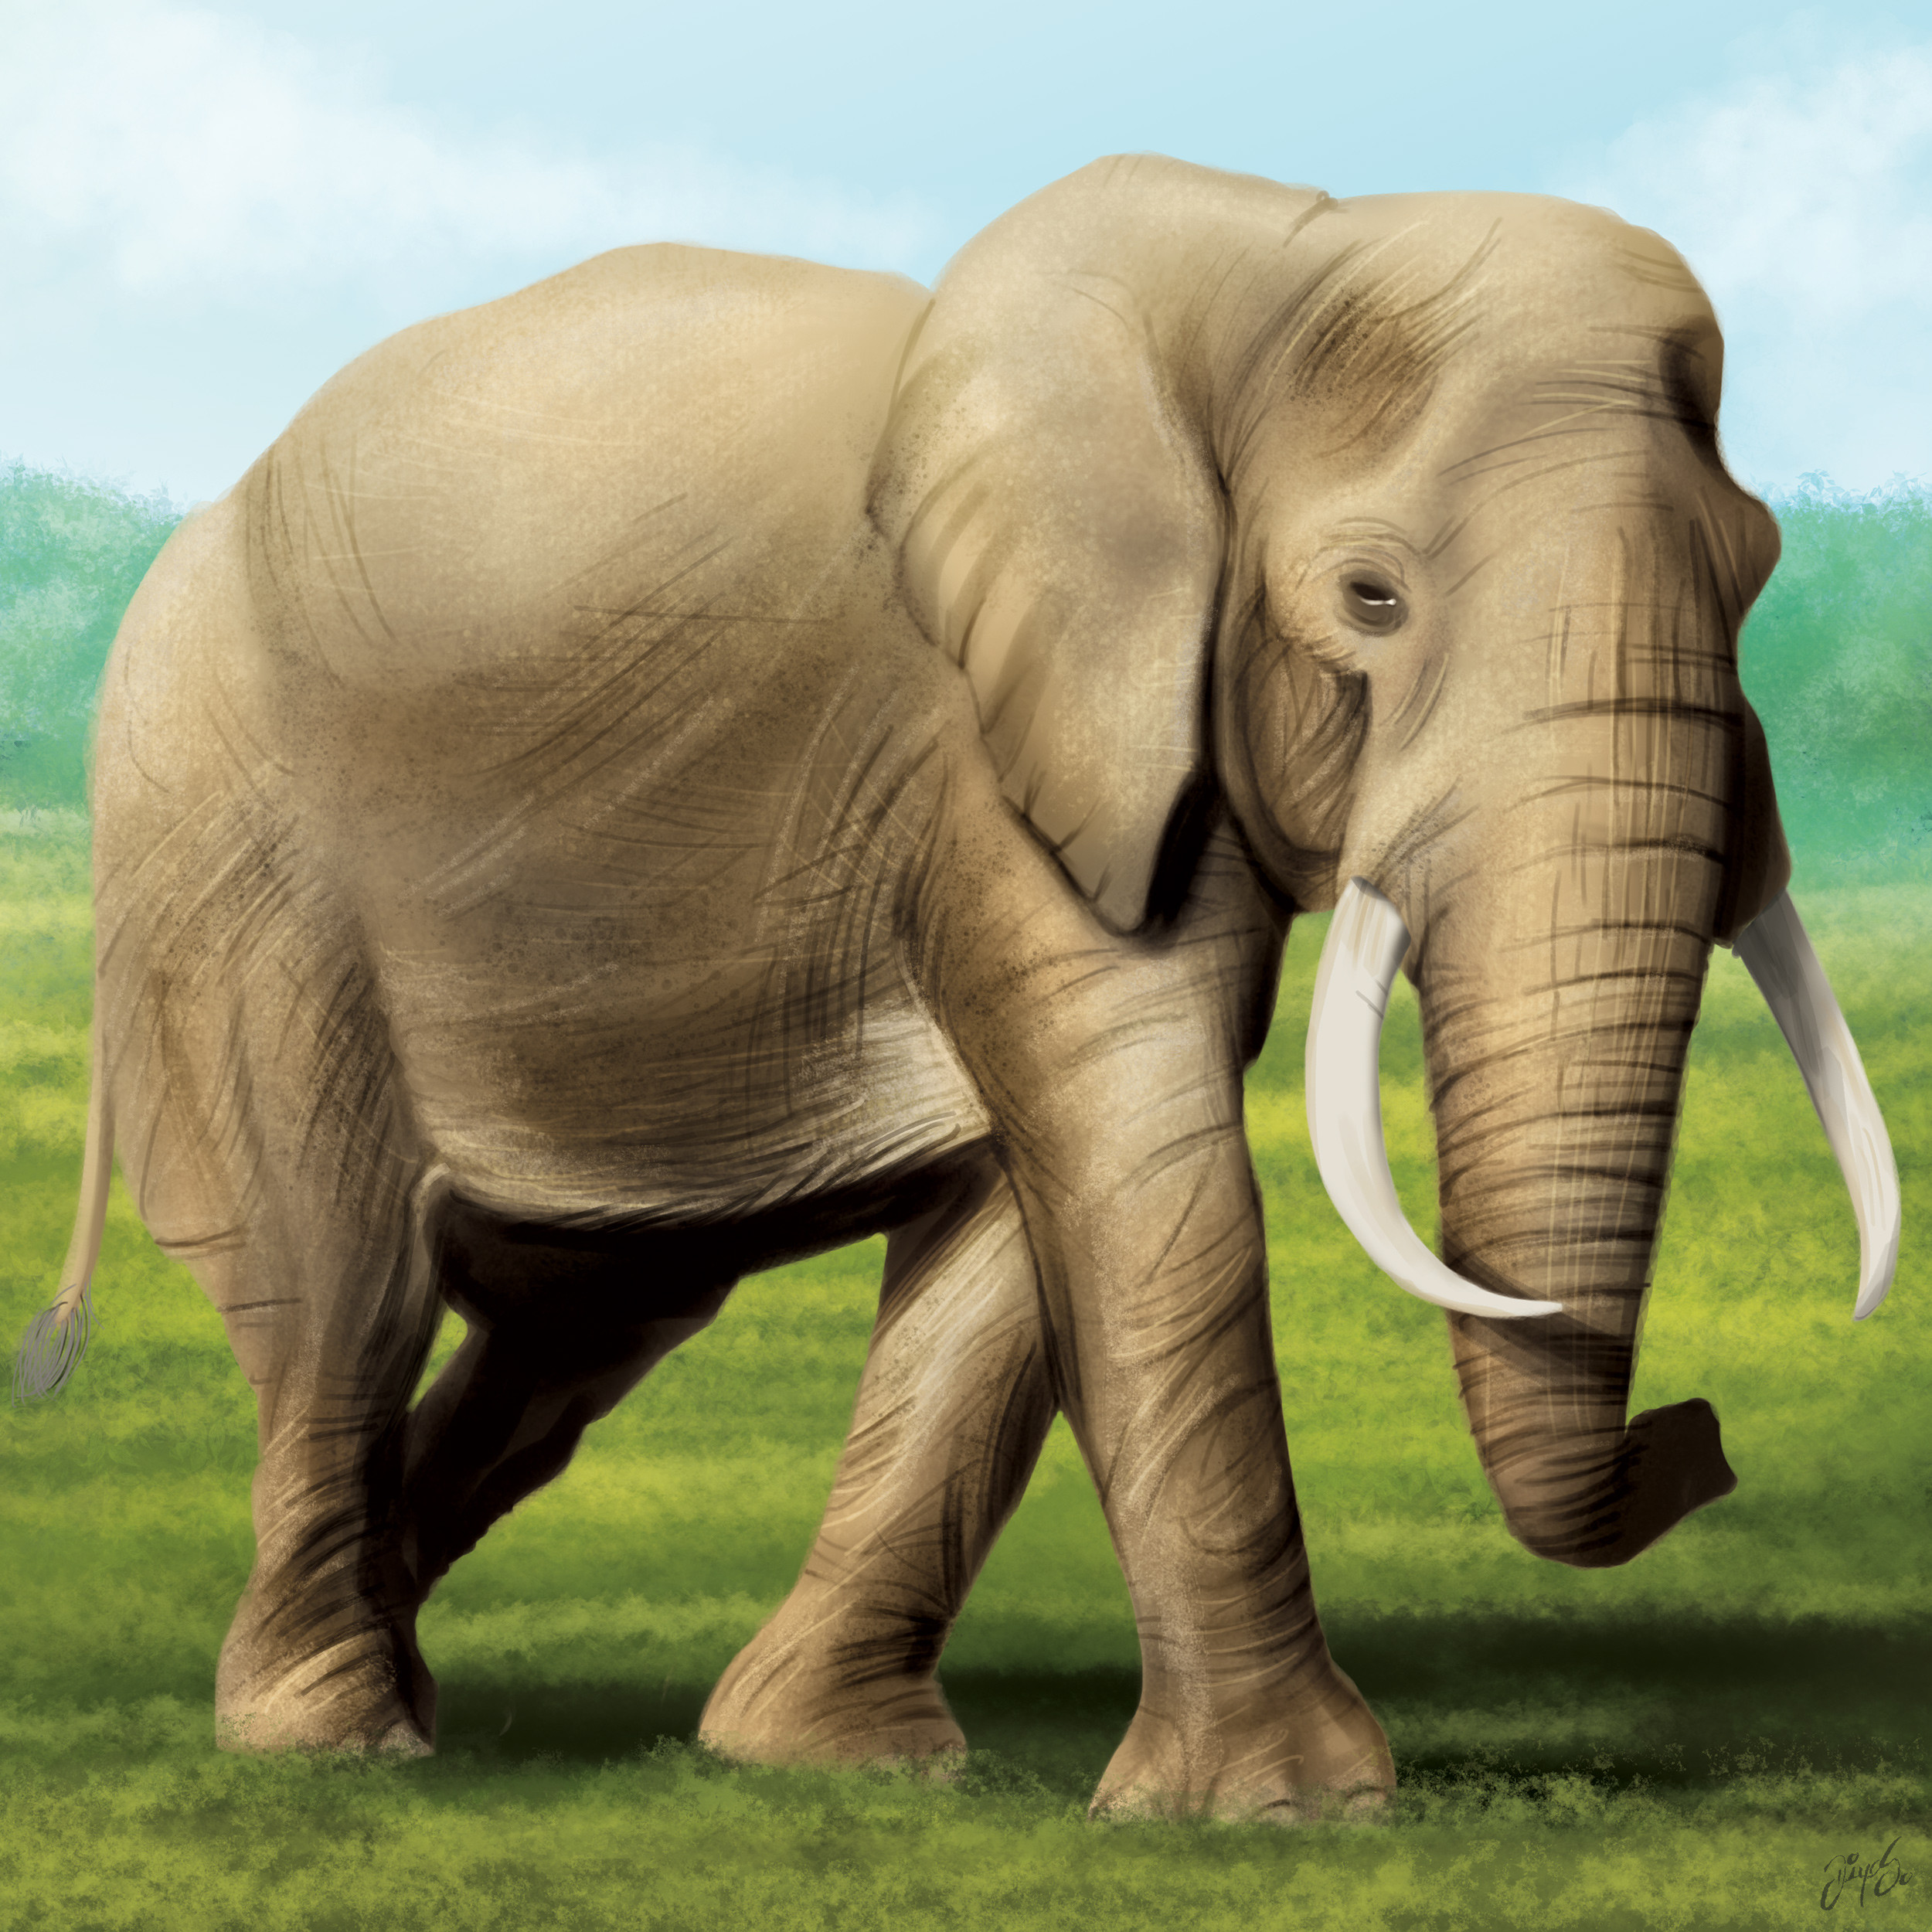 Tile illustration - Elephant